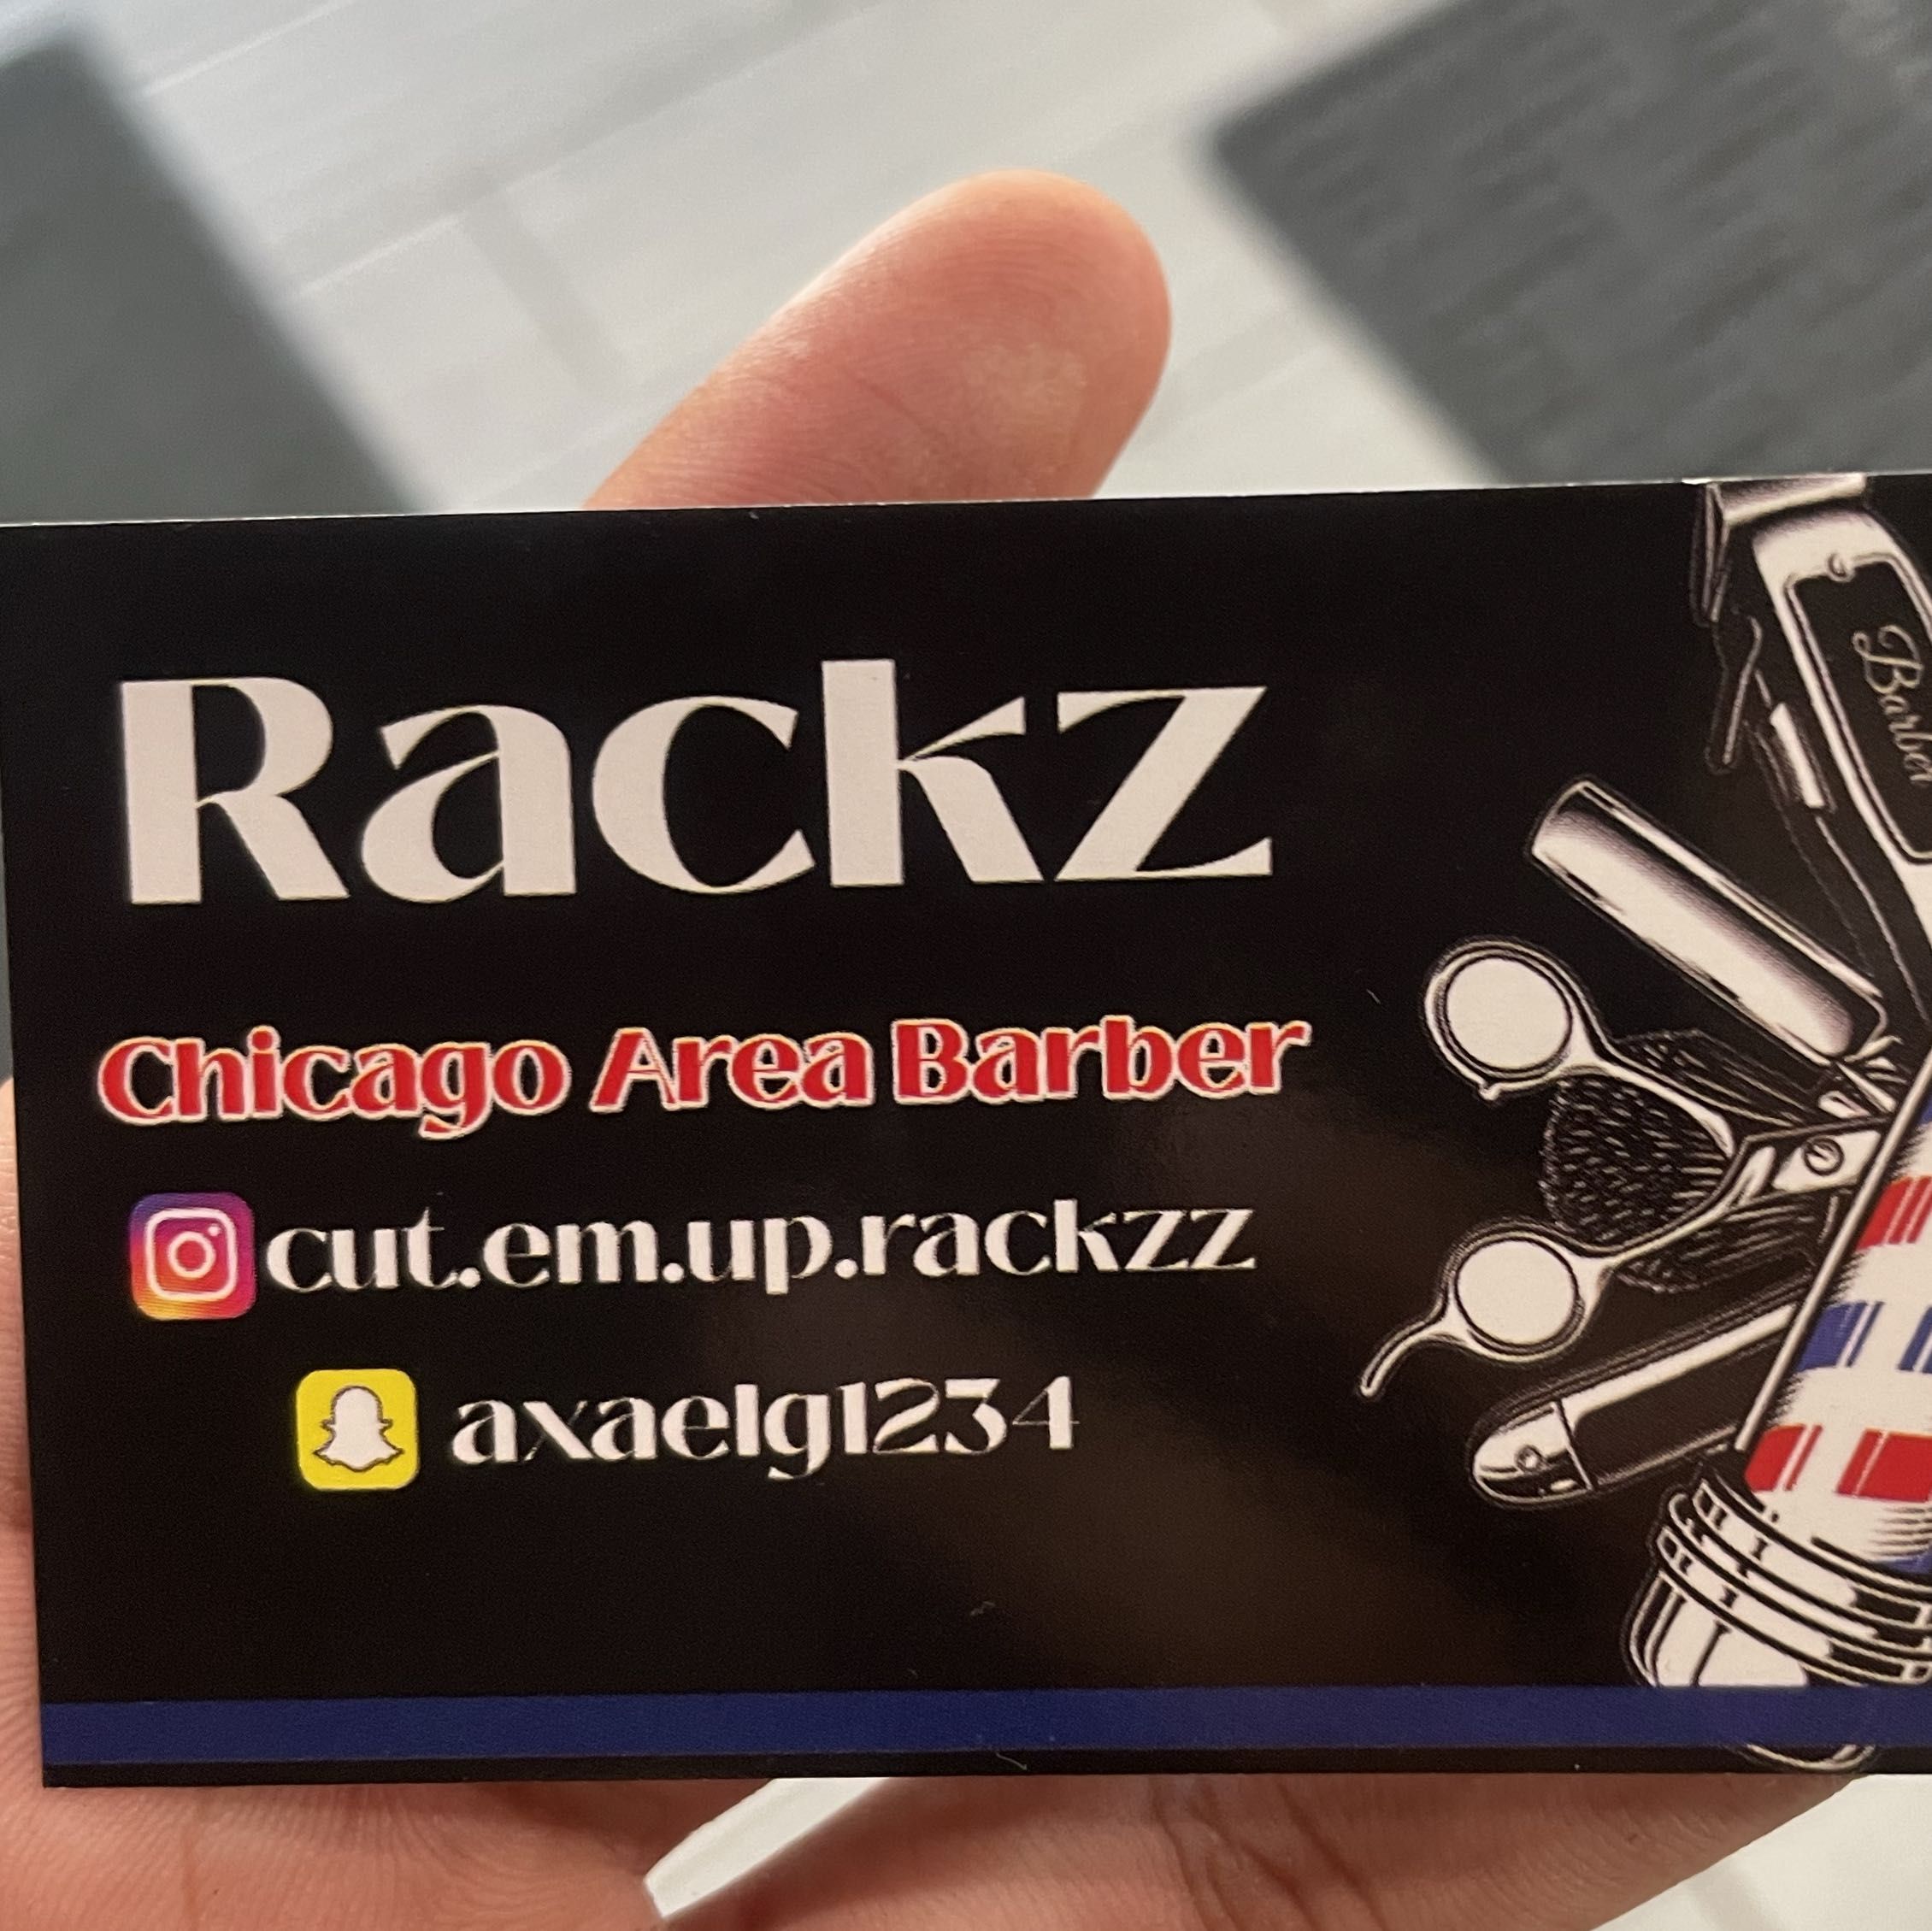 Rackz haircuts, 3722 west 79th street, Chicago, 60652